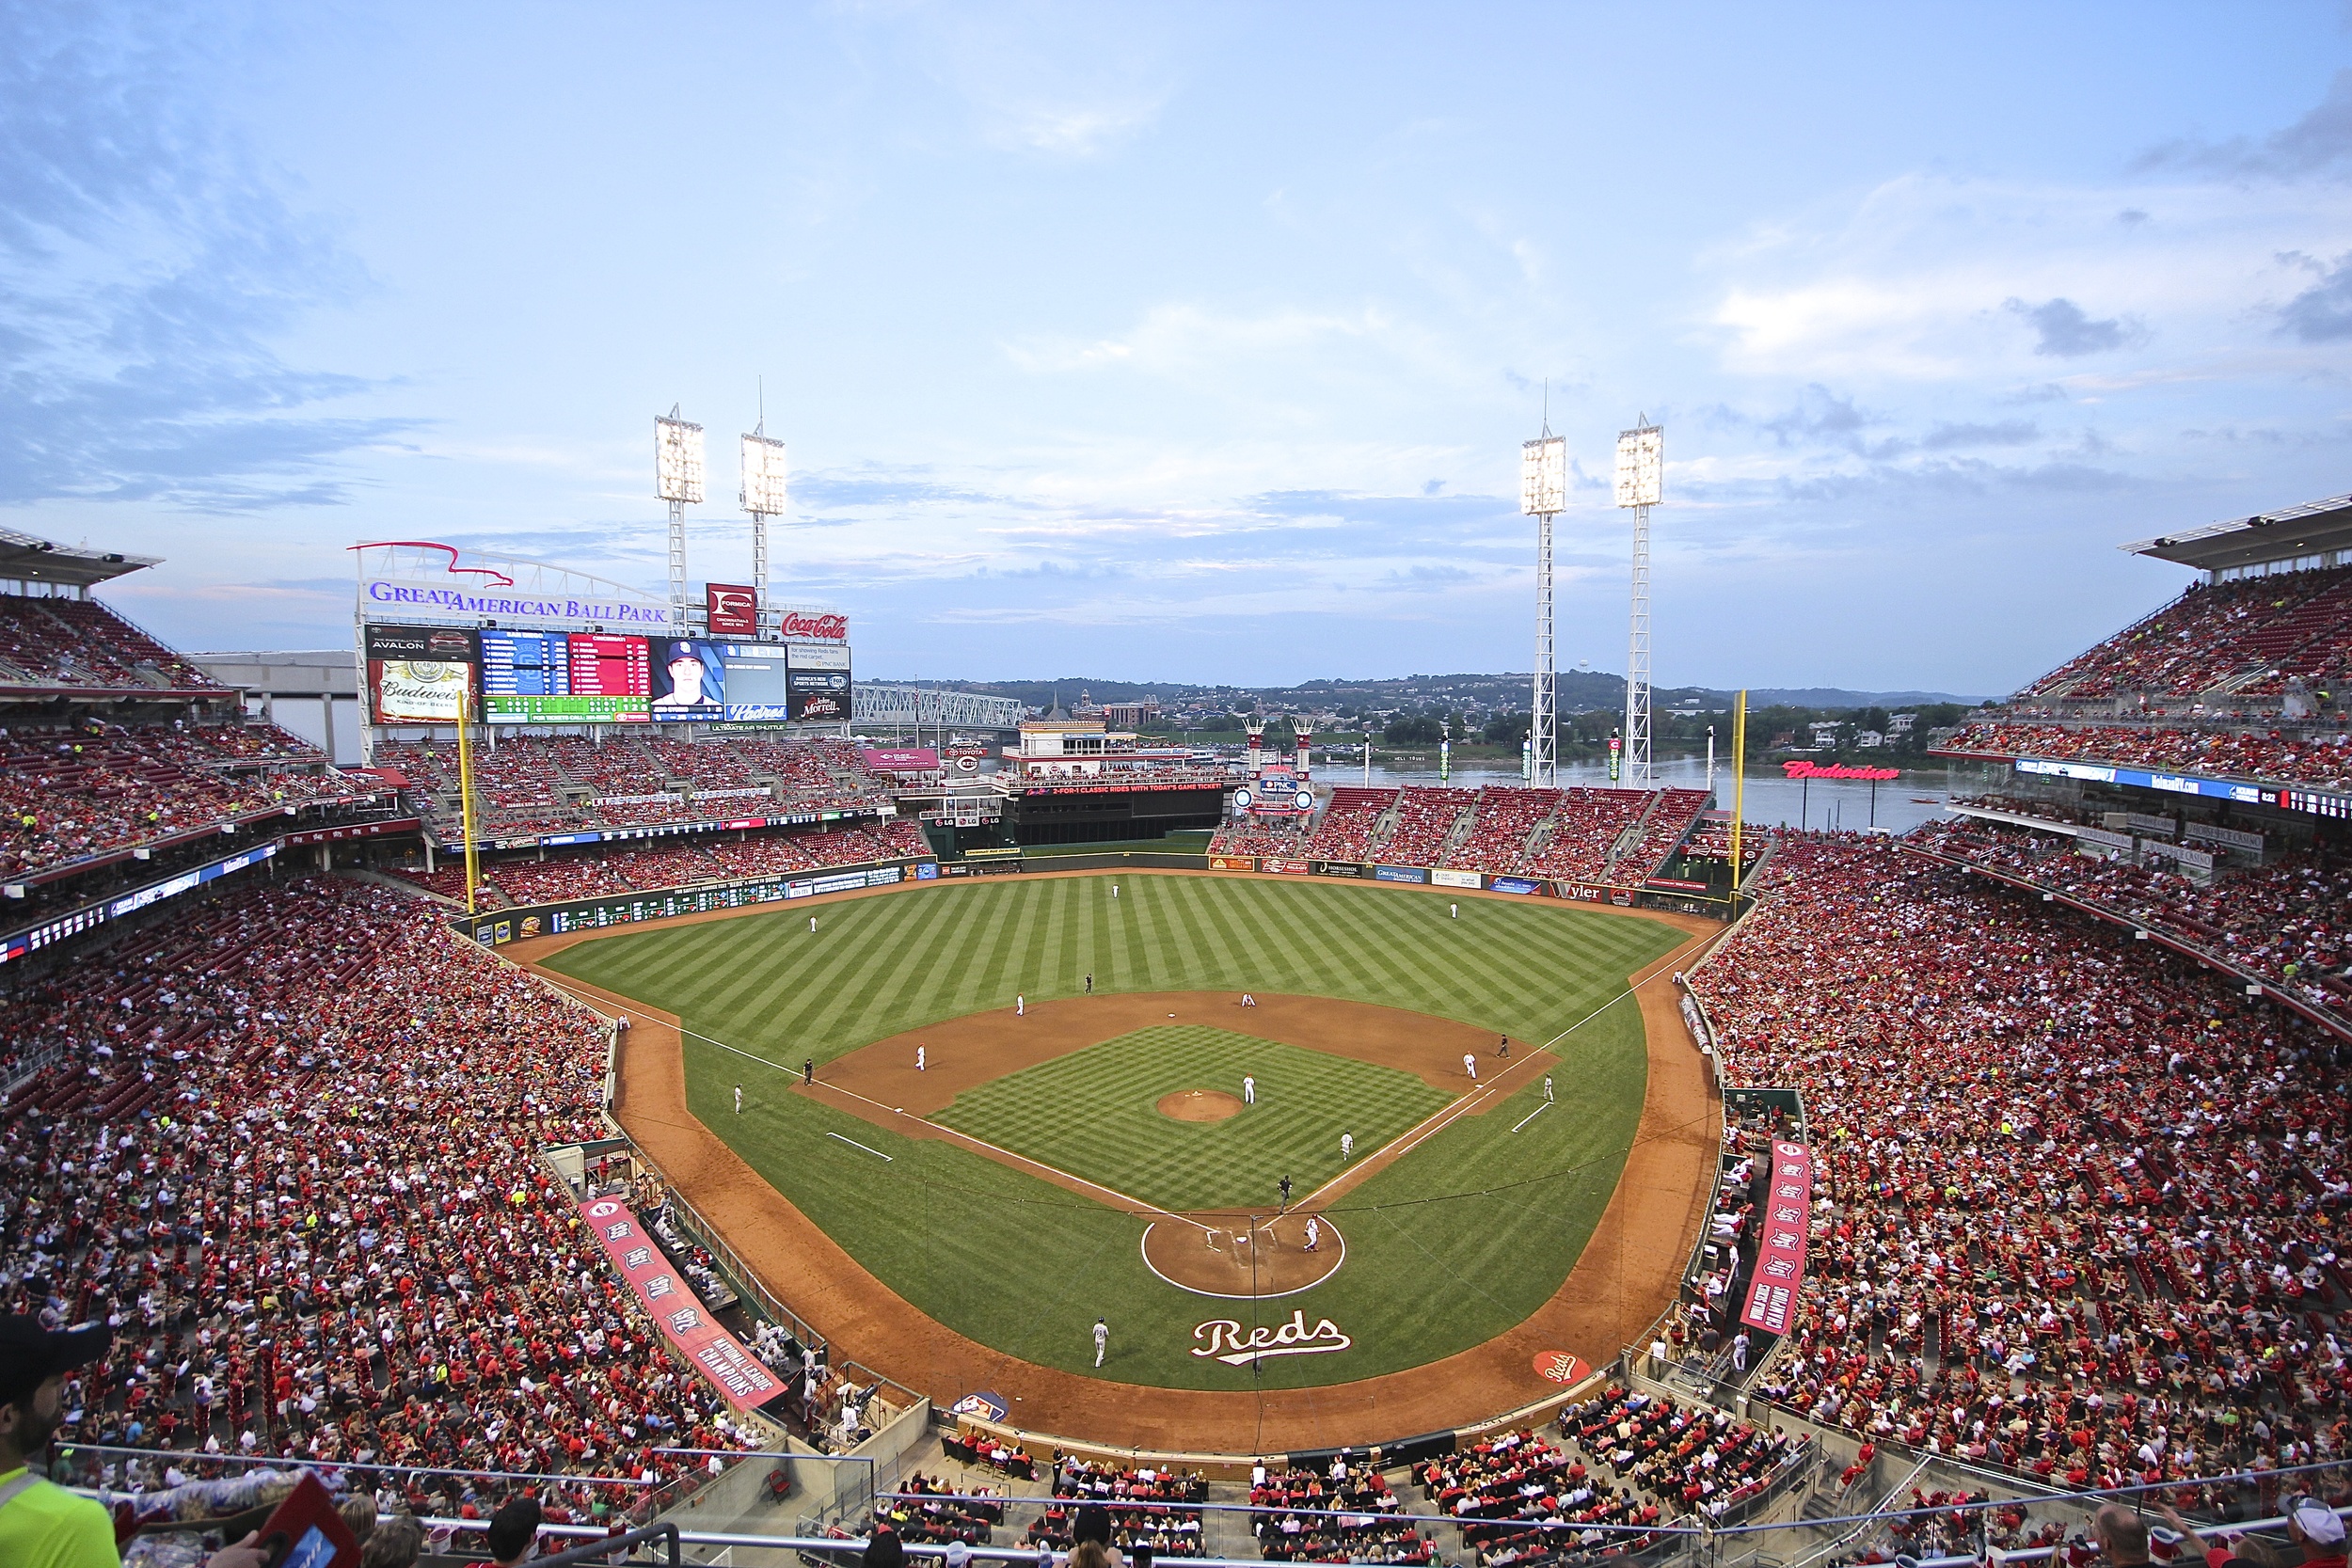 Cincinnati Reds Great American Ball Park Baseball Stadium Field 8x10 to  48x36 photos 02